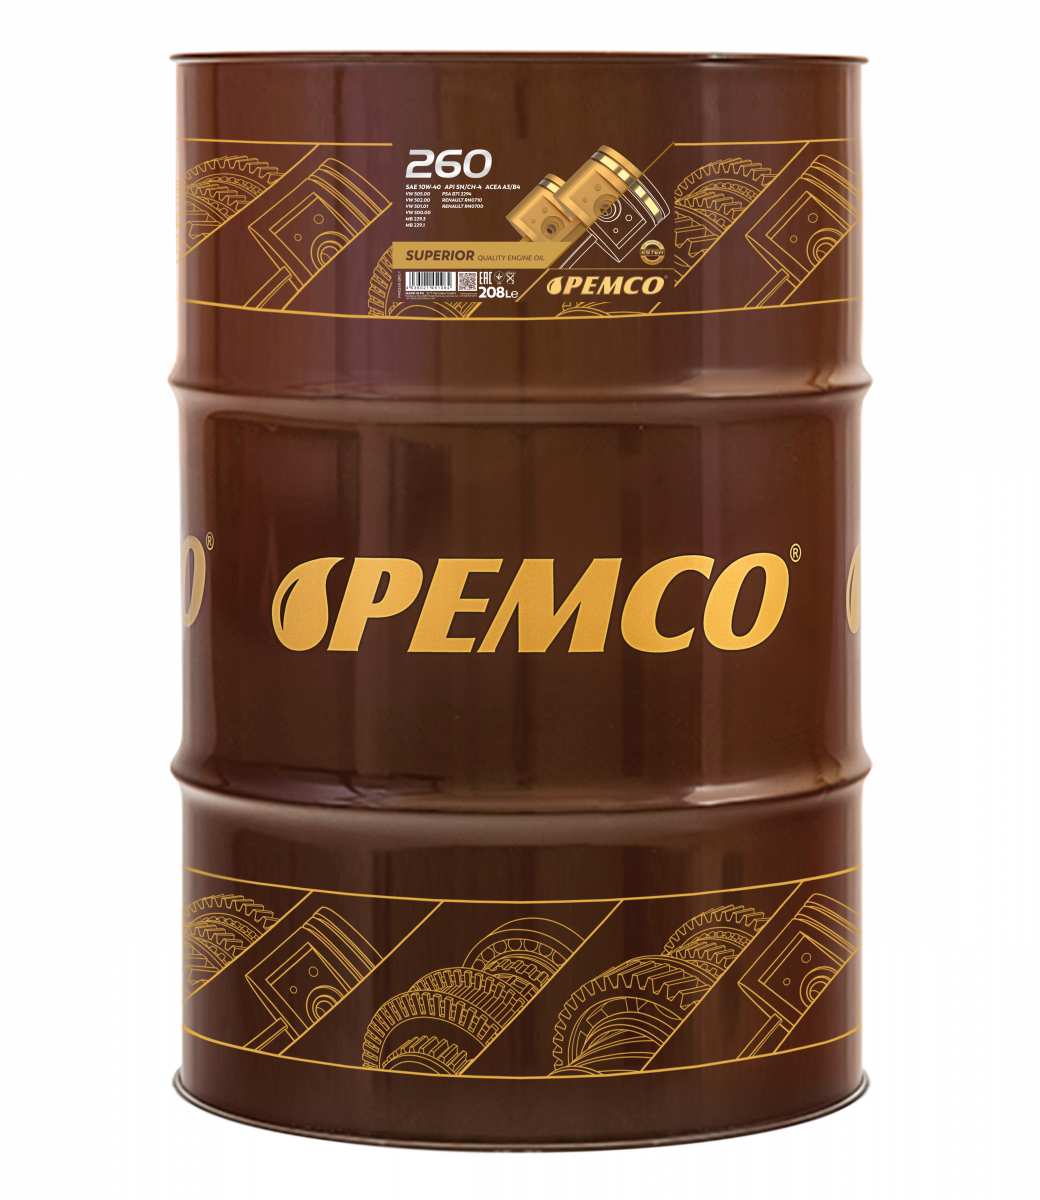 Моторное масло PEMCO 260 10W-40 SN/CH-4 полусинтетическое, 208л (PM0260-DR)